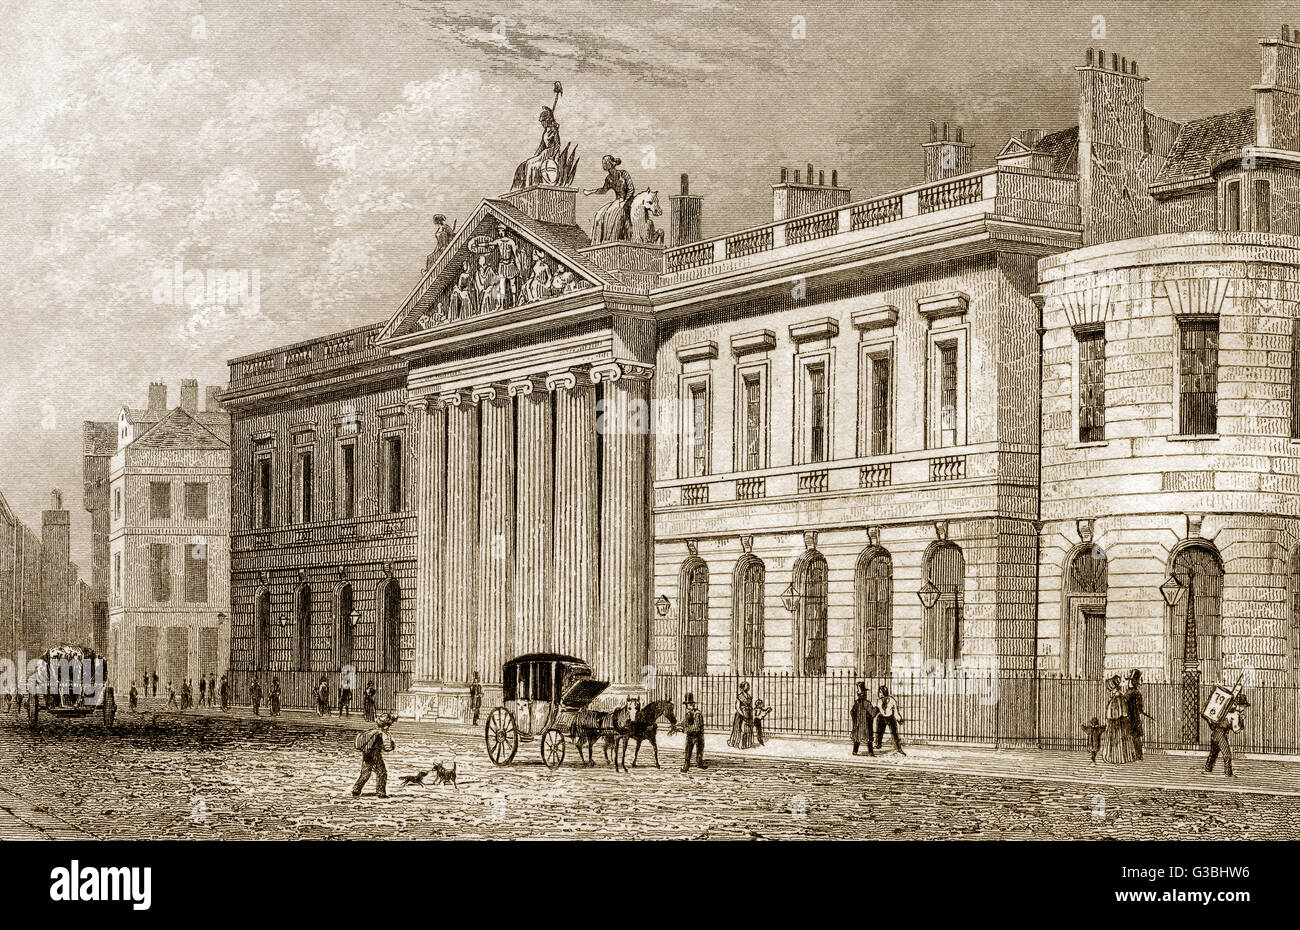 East India House, headquarters of the East India Company, Leadenhall Street, London, England, 19th century Stock Photo